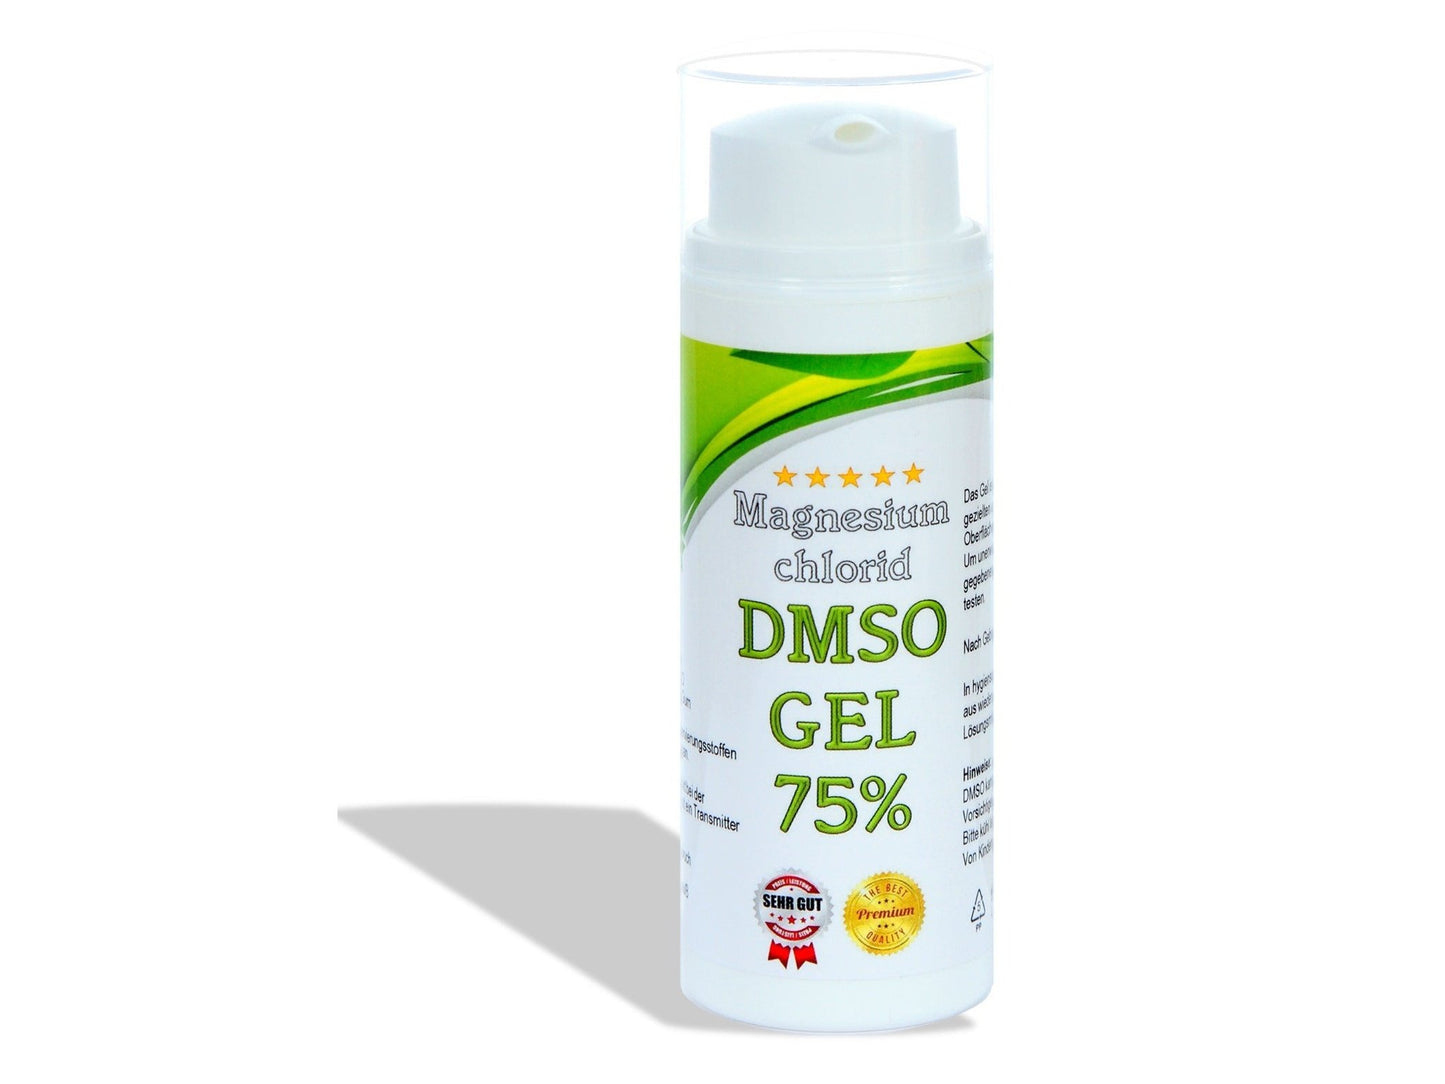 Leivys DMSO GEL - Mit Magnesium Chlorid